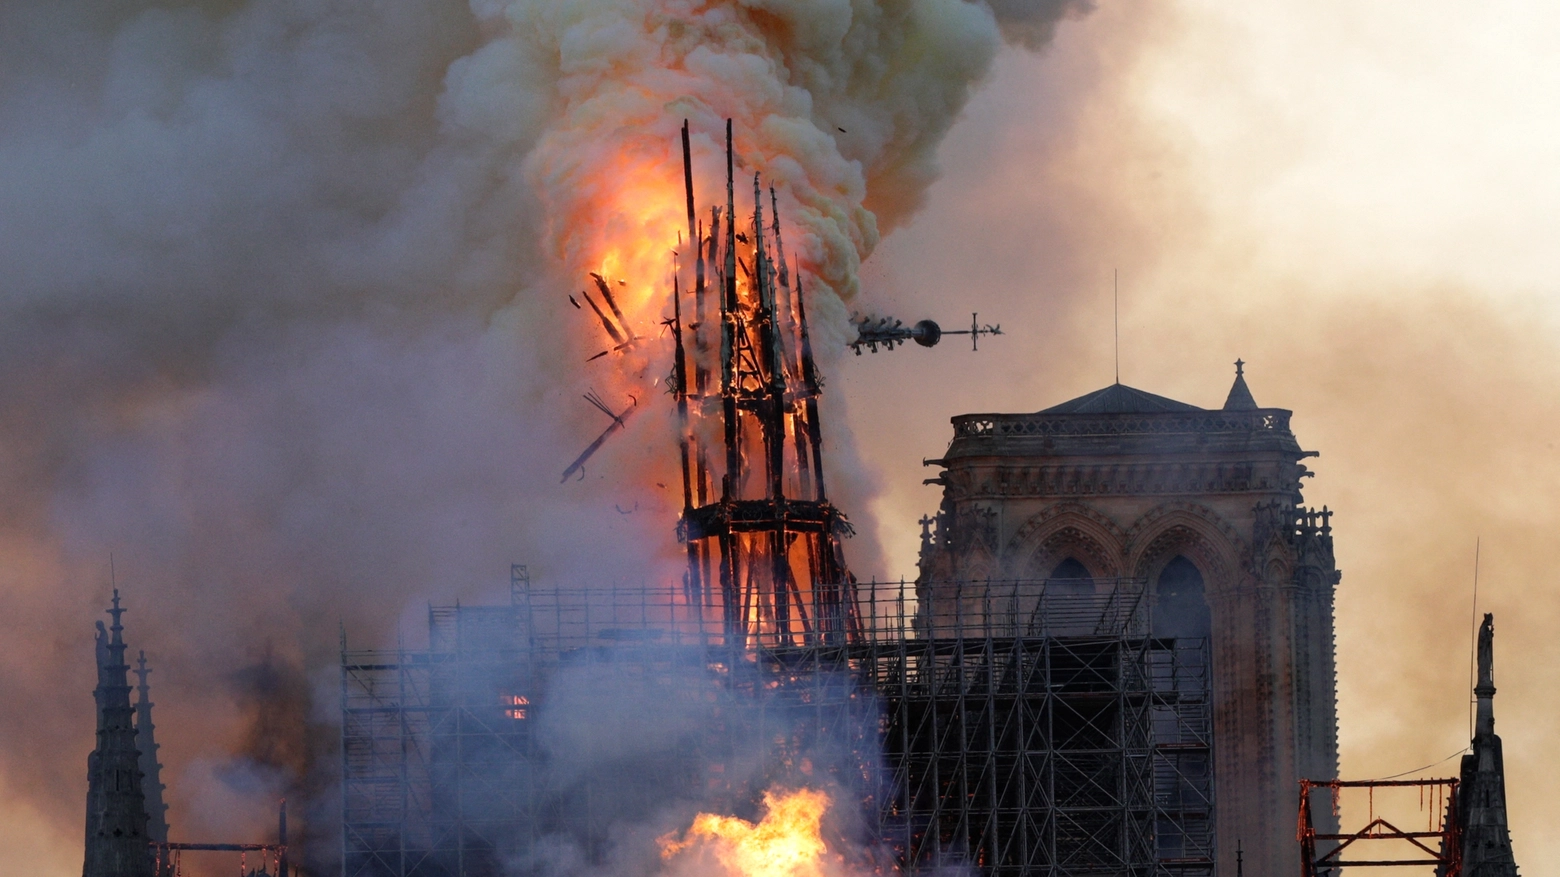 La cattedrale di Notre Dame in fiamme